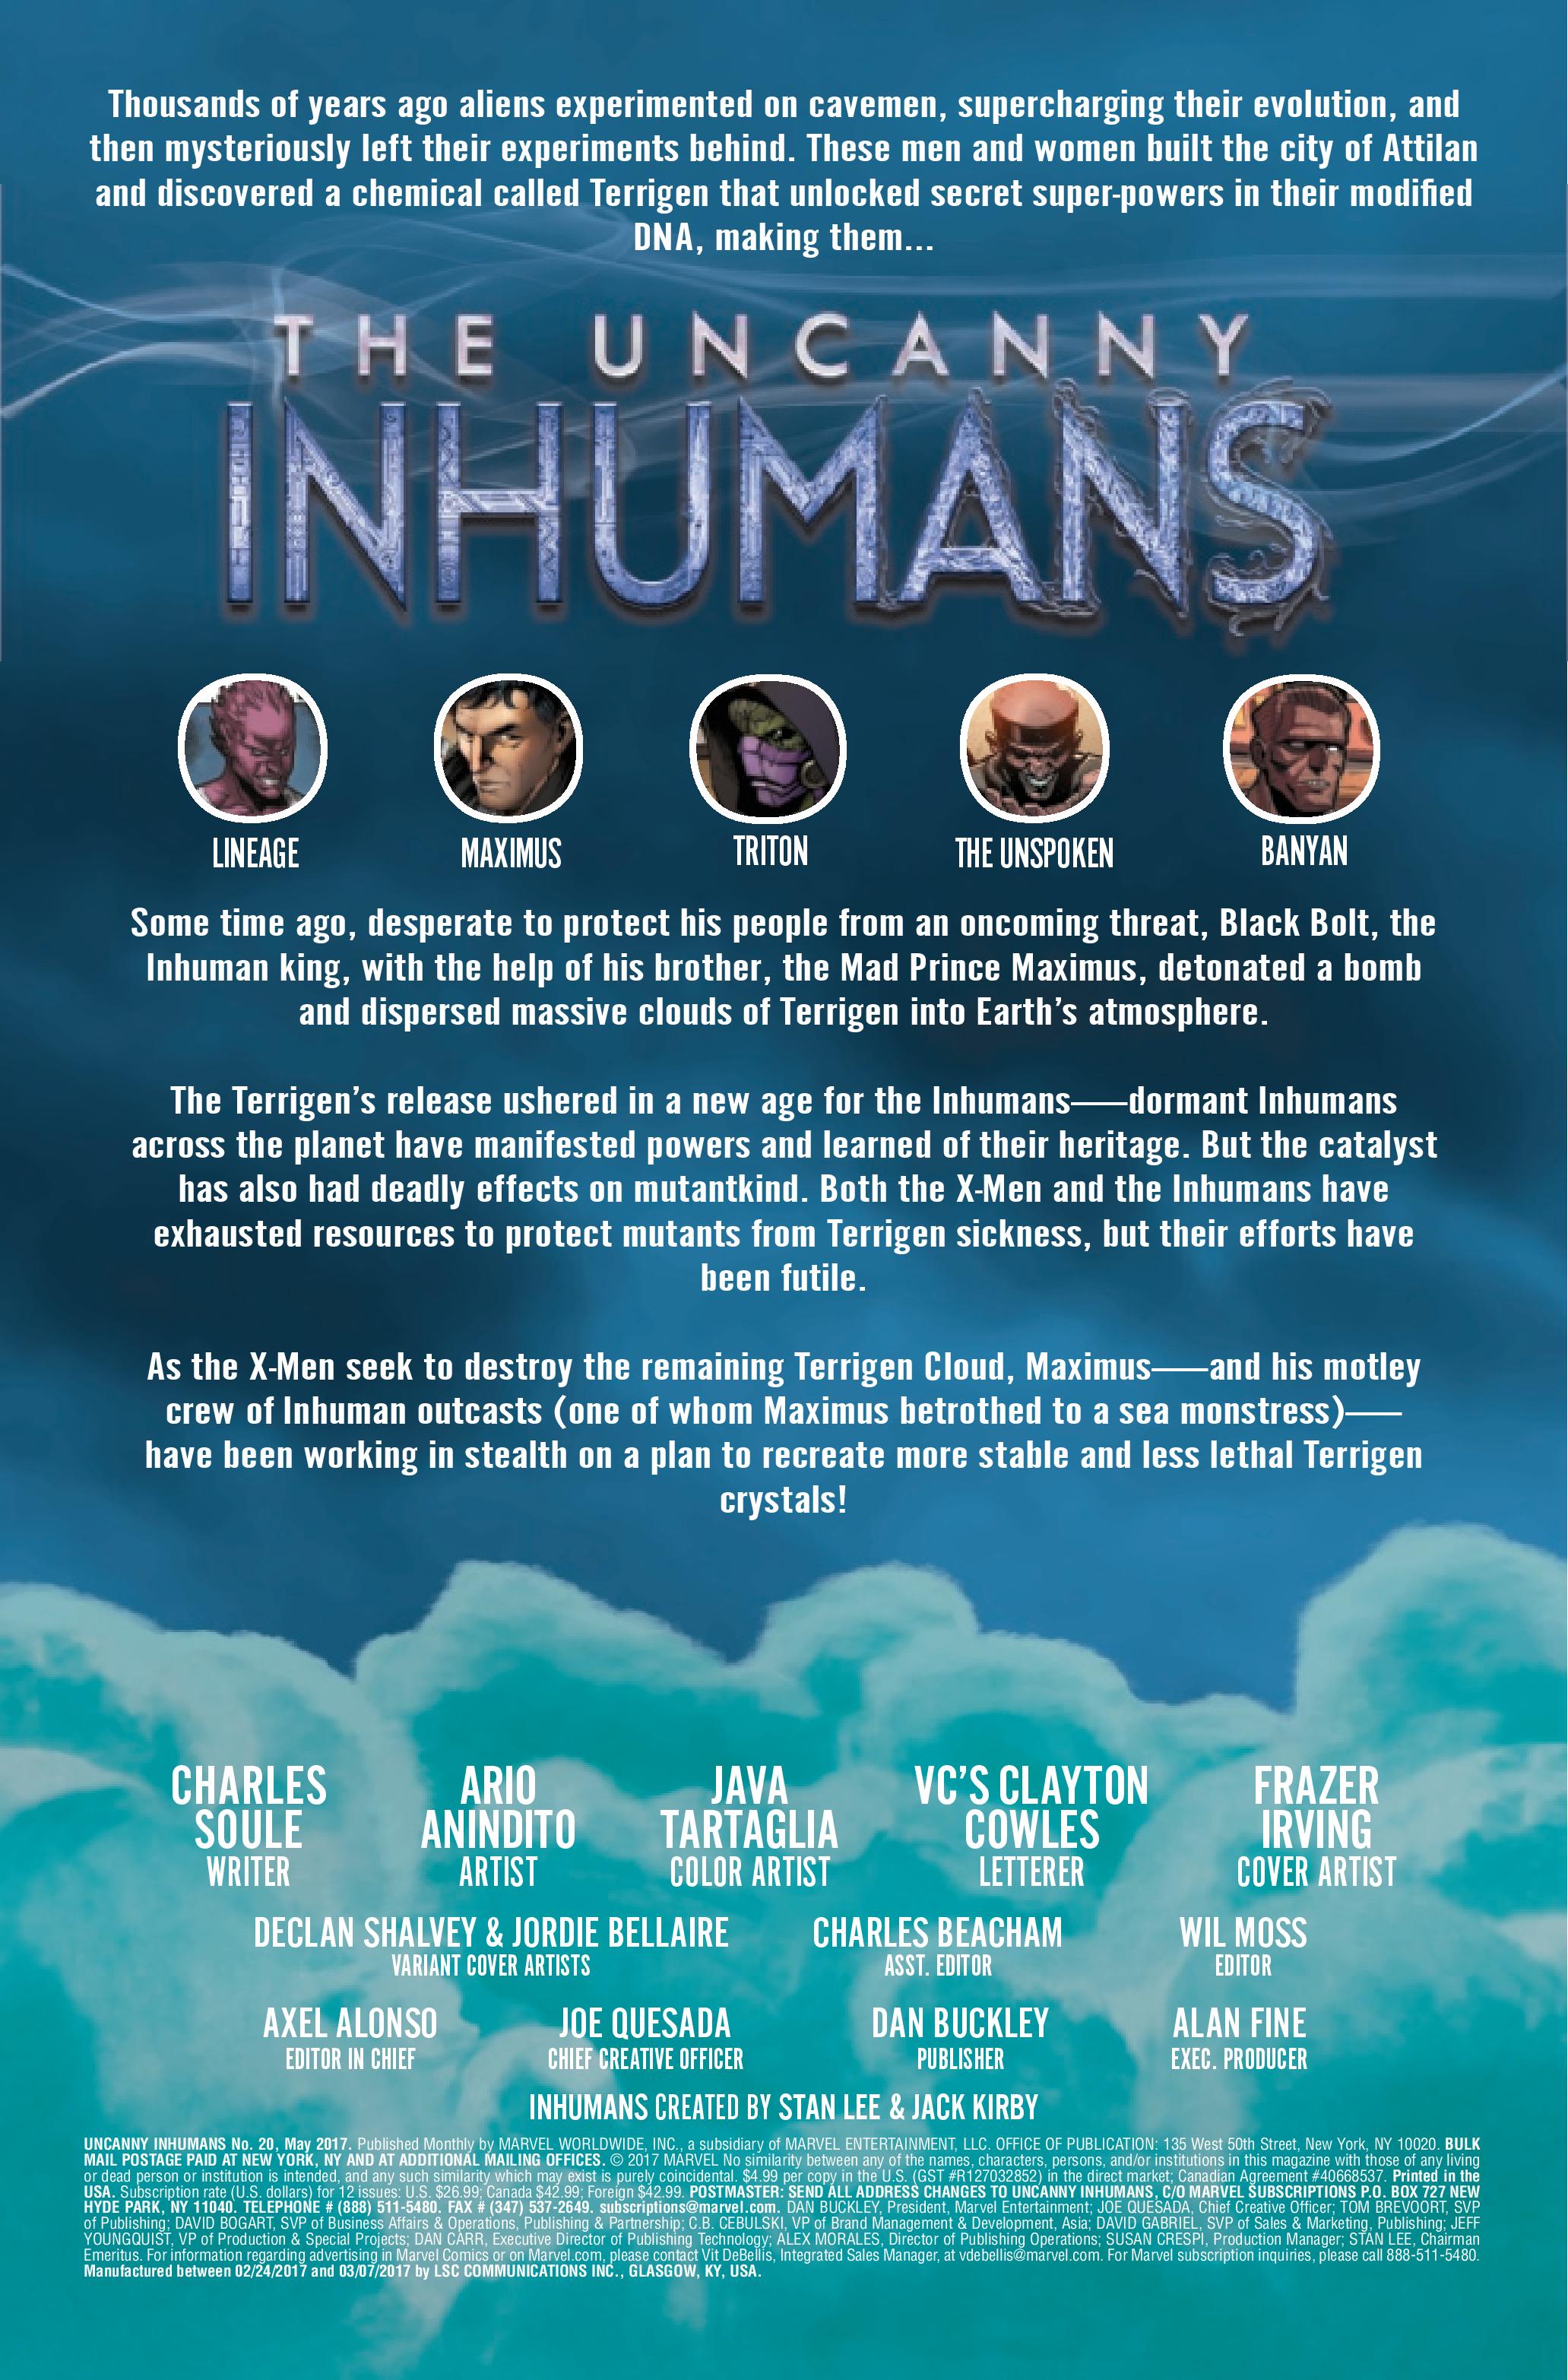 Uncanny Inhumans #20 (2015)